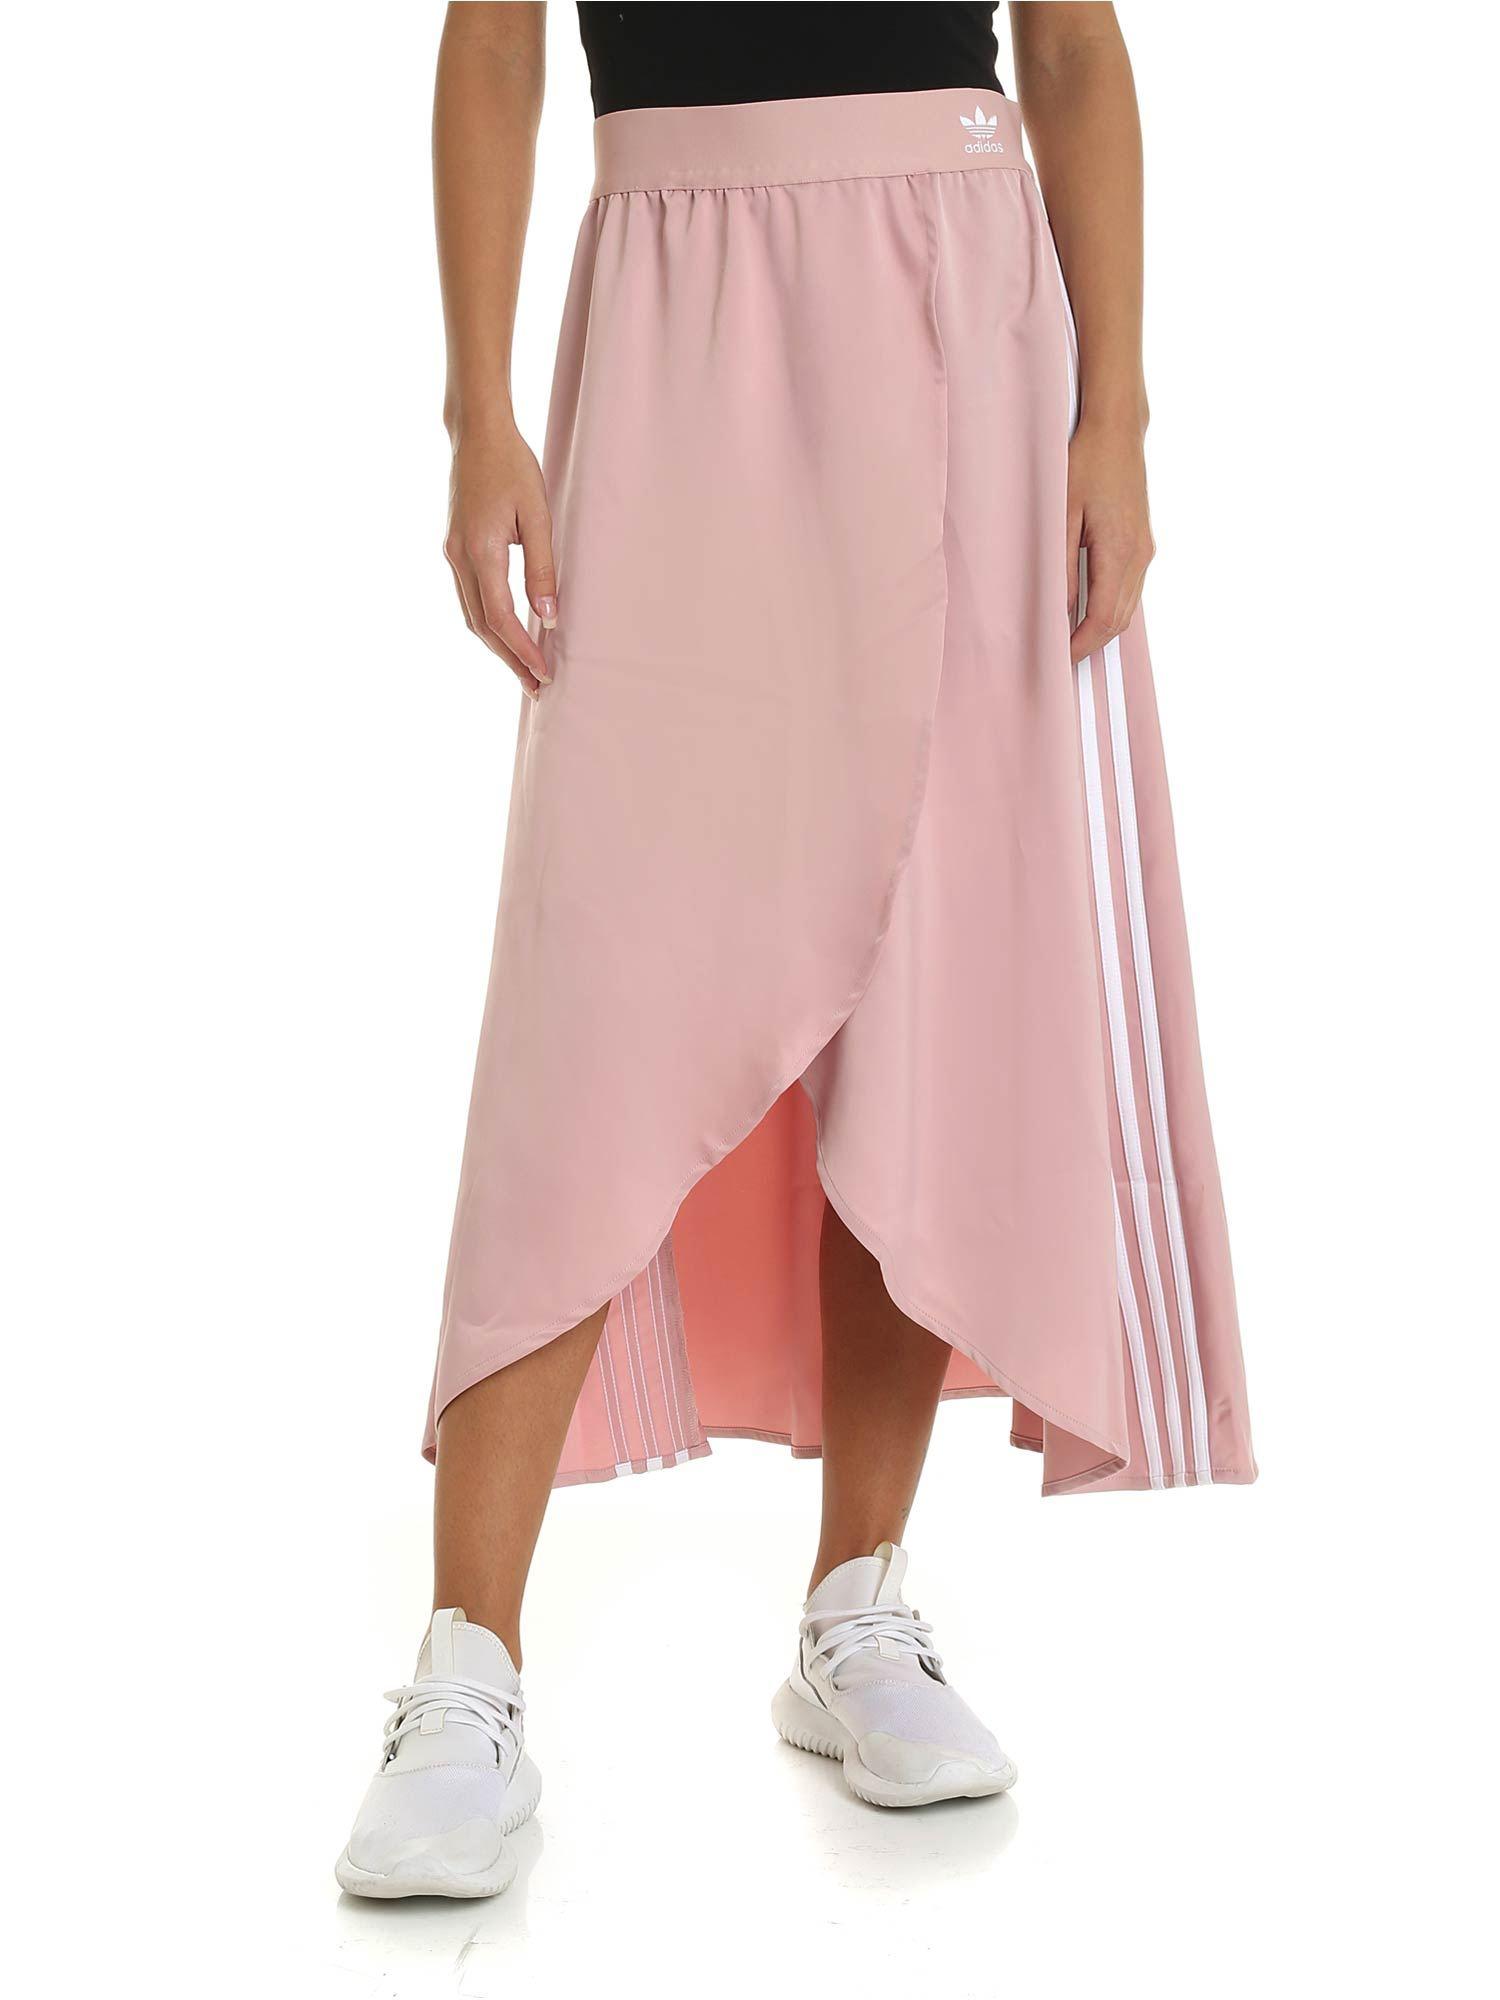 adidas pink skirt